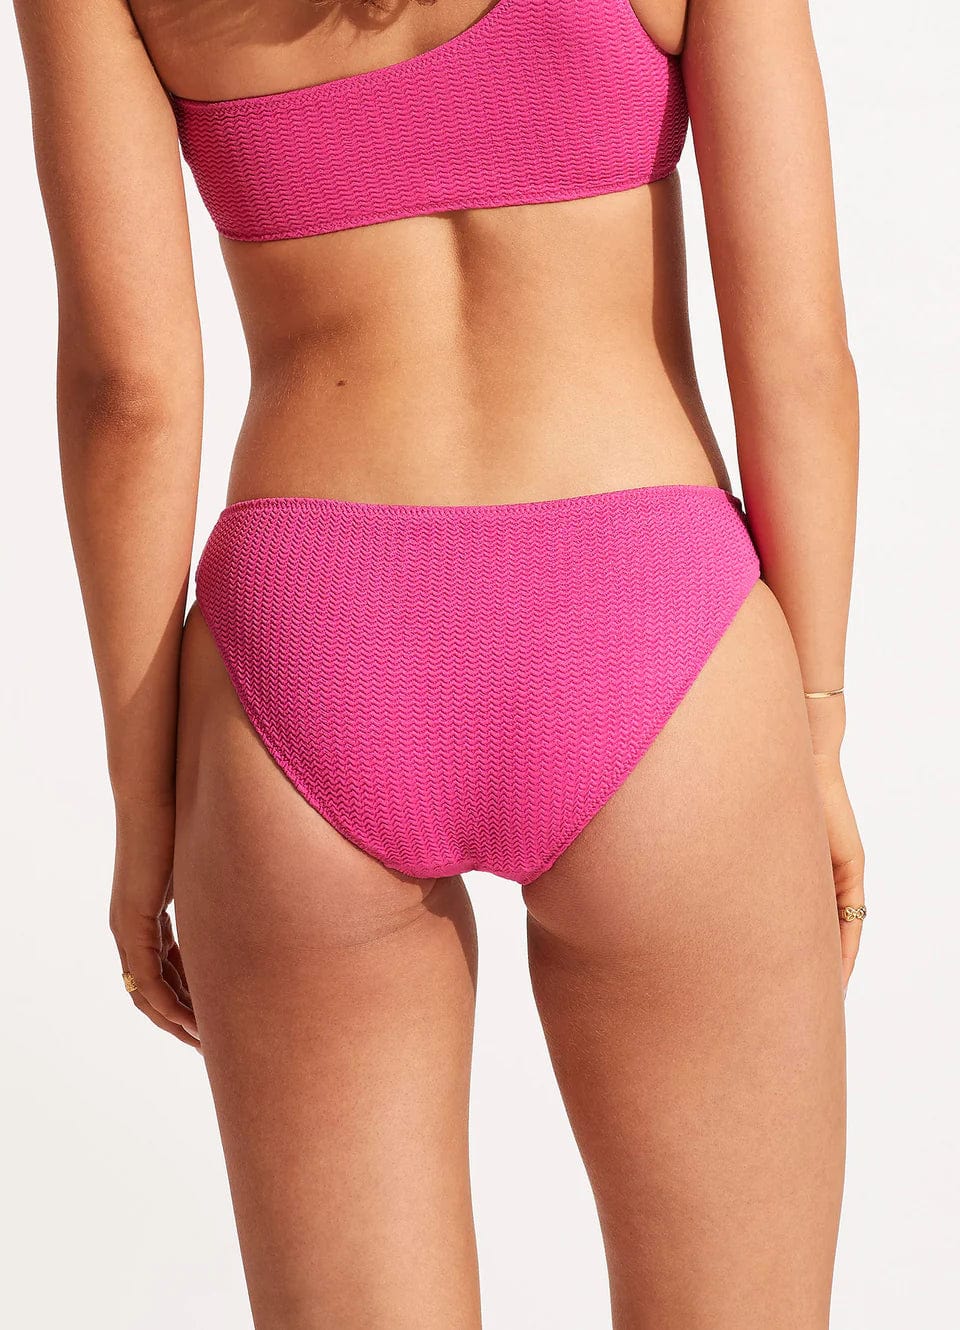 Sea Dive Hipster Pant - Fuchsia Rose - Seafolly - Splash Swimwear  - bikini bottoms, Seafolly, Sept23, Womens, womens swim - Splash Swimwear 